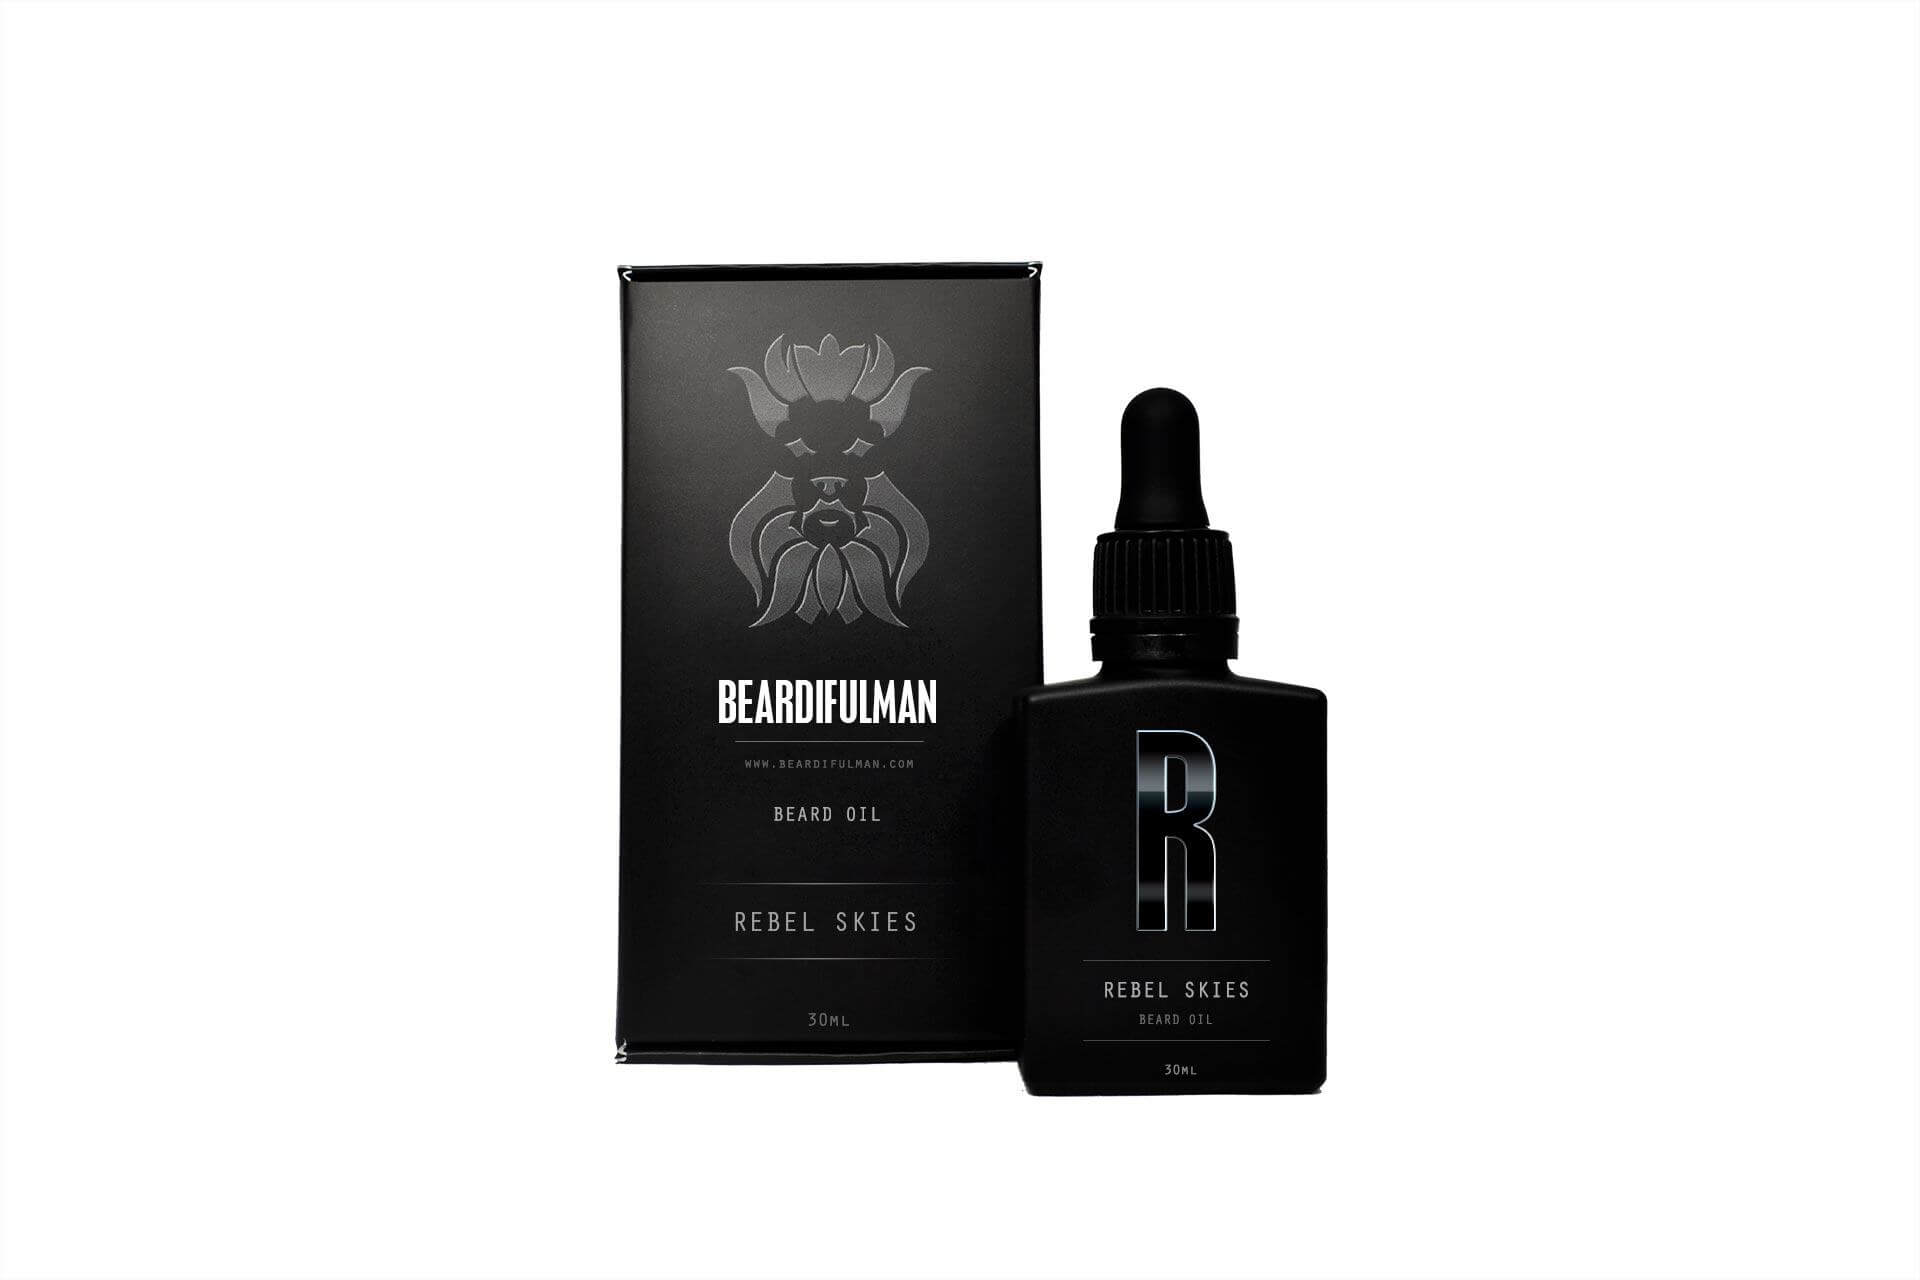 Rebel Skies Beard Oil - Premium beard care oil from Beardifulman